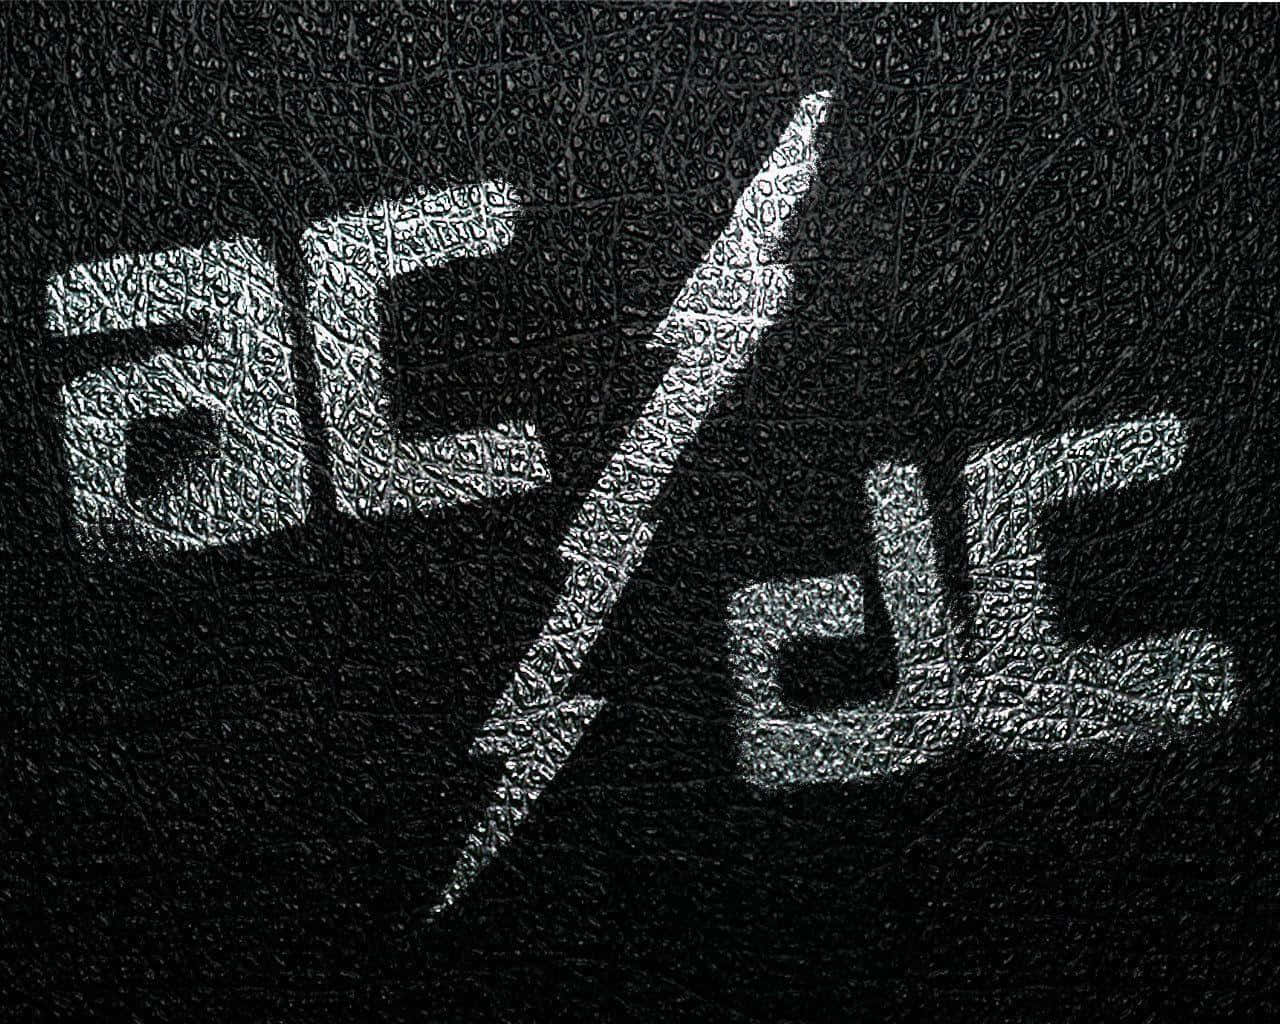 Ac Dc: Legendary Australian Rock Band